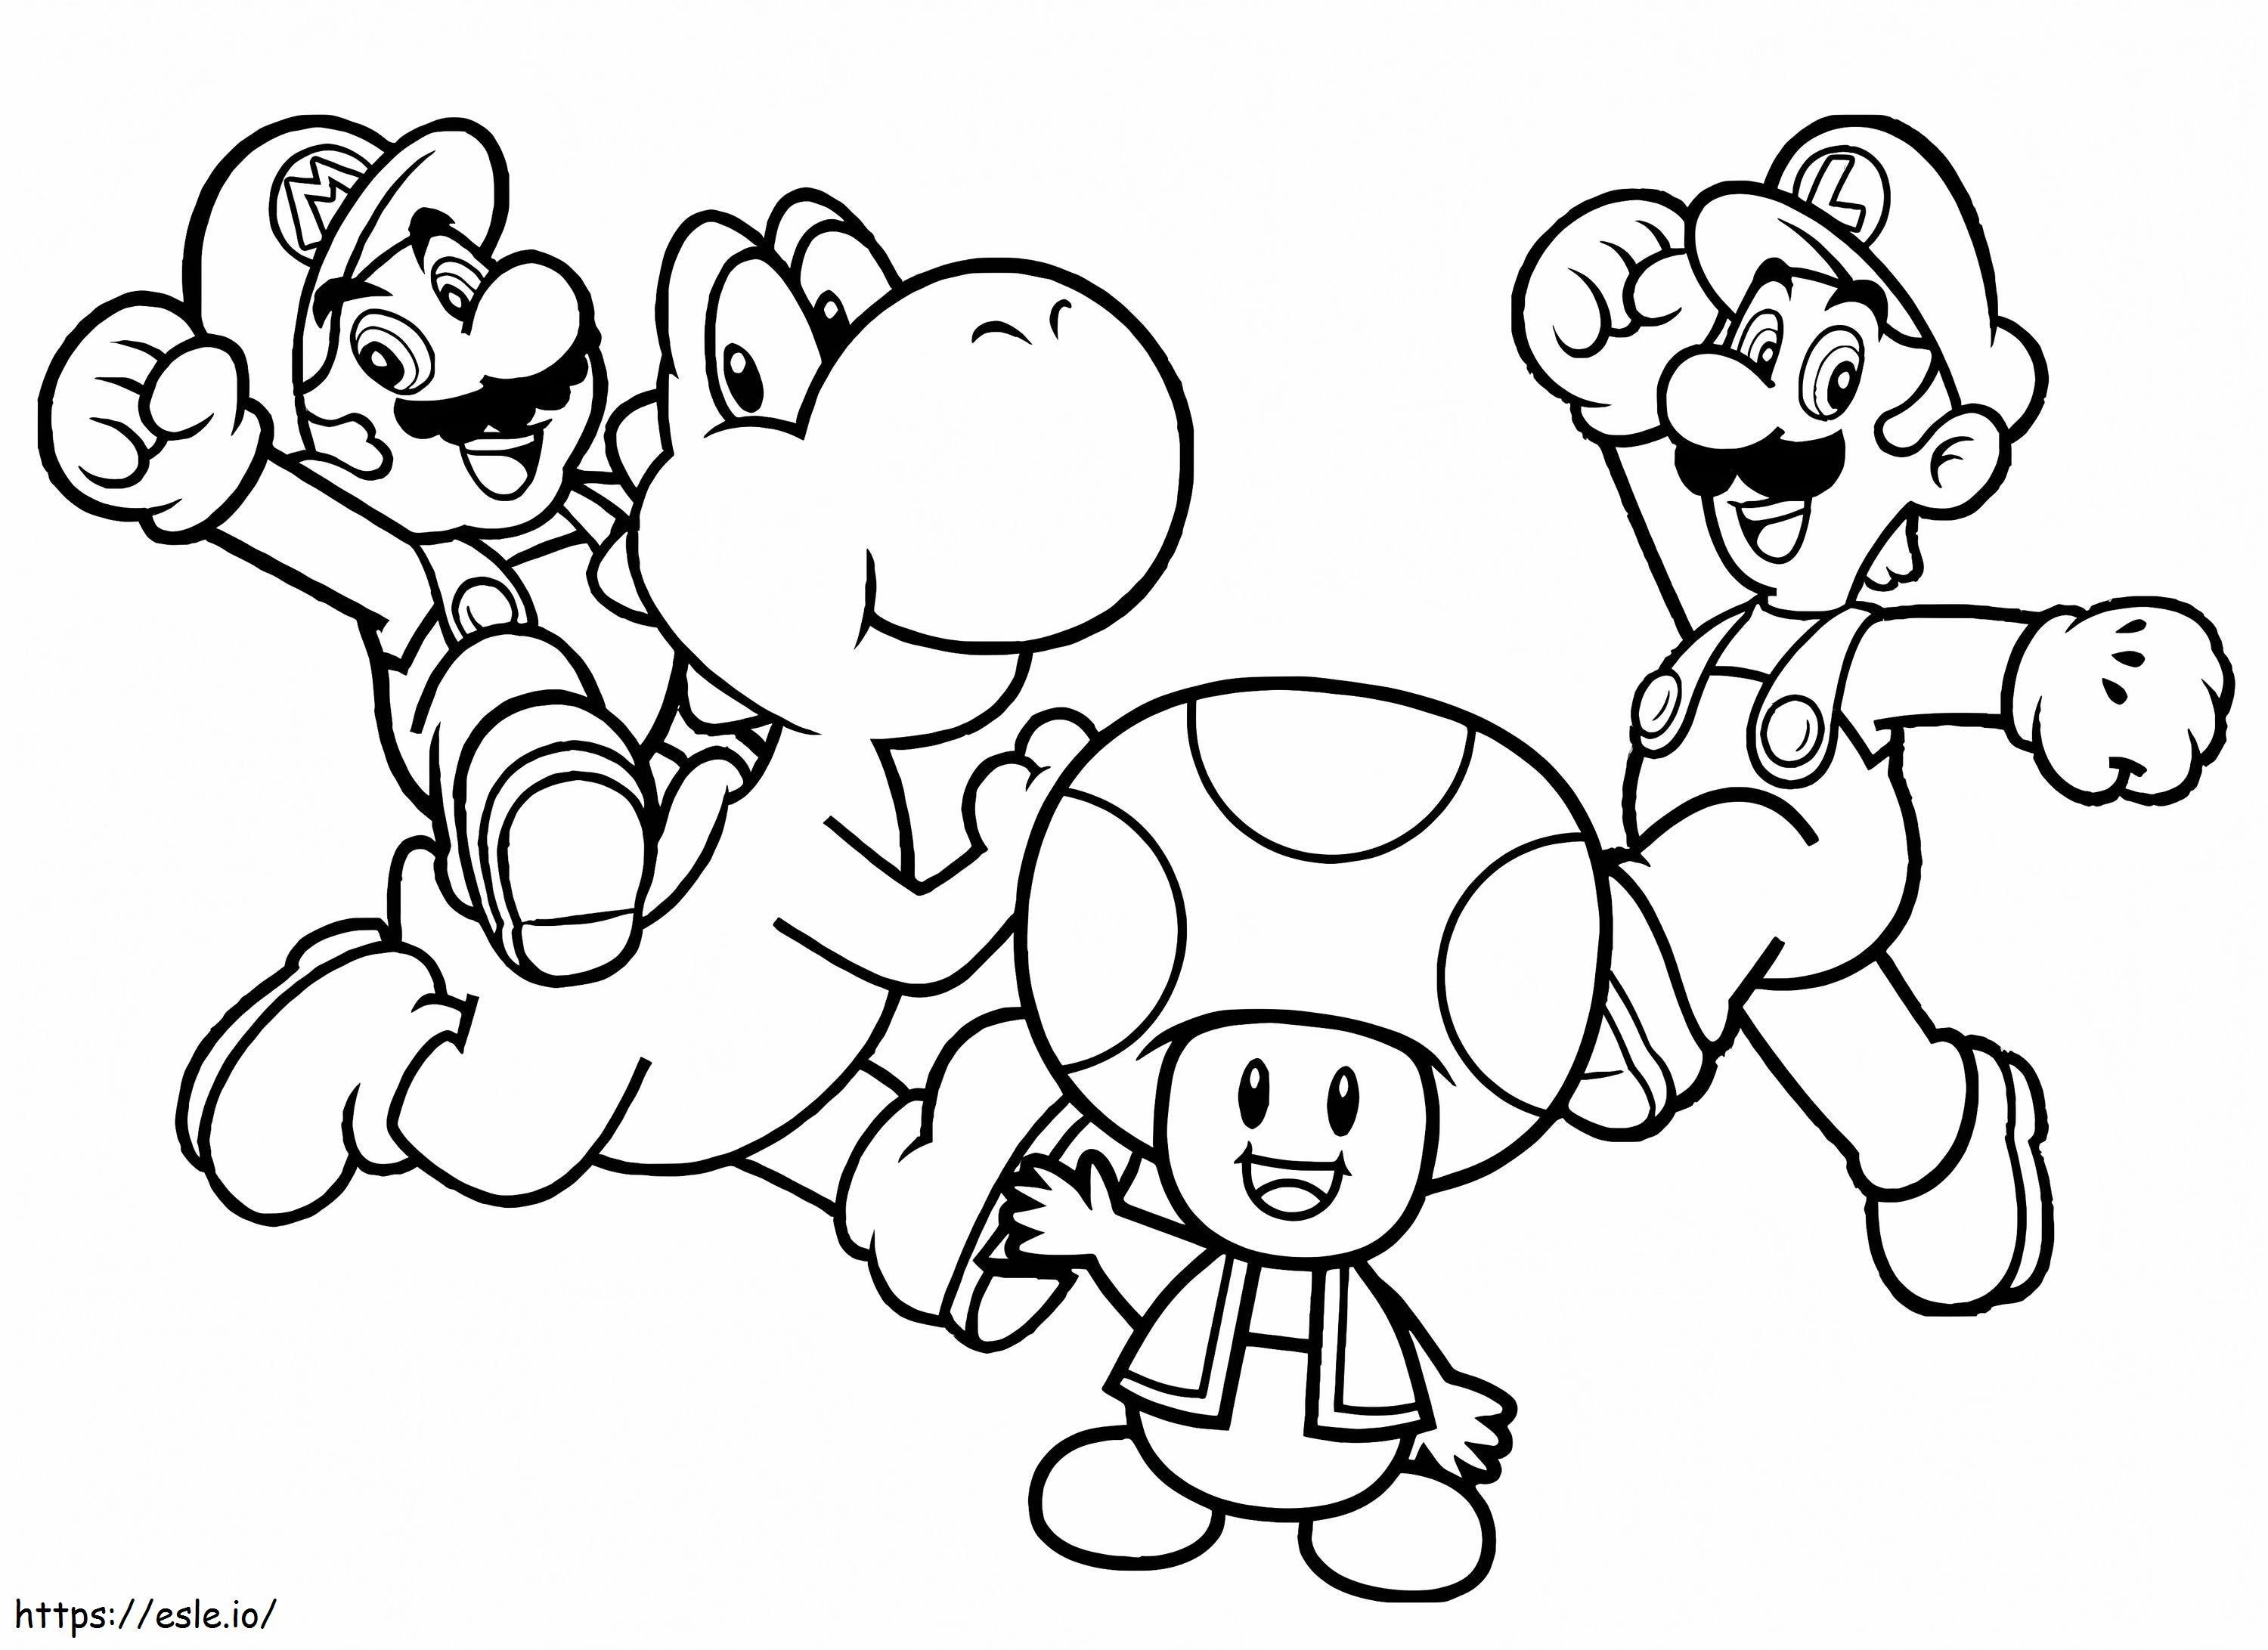 Personages uit Mario kleurplaat kleurplaat